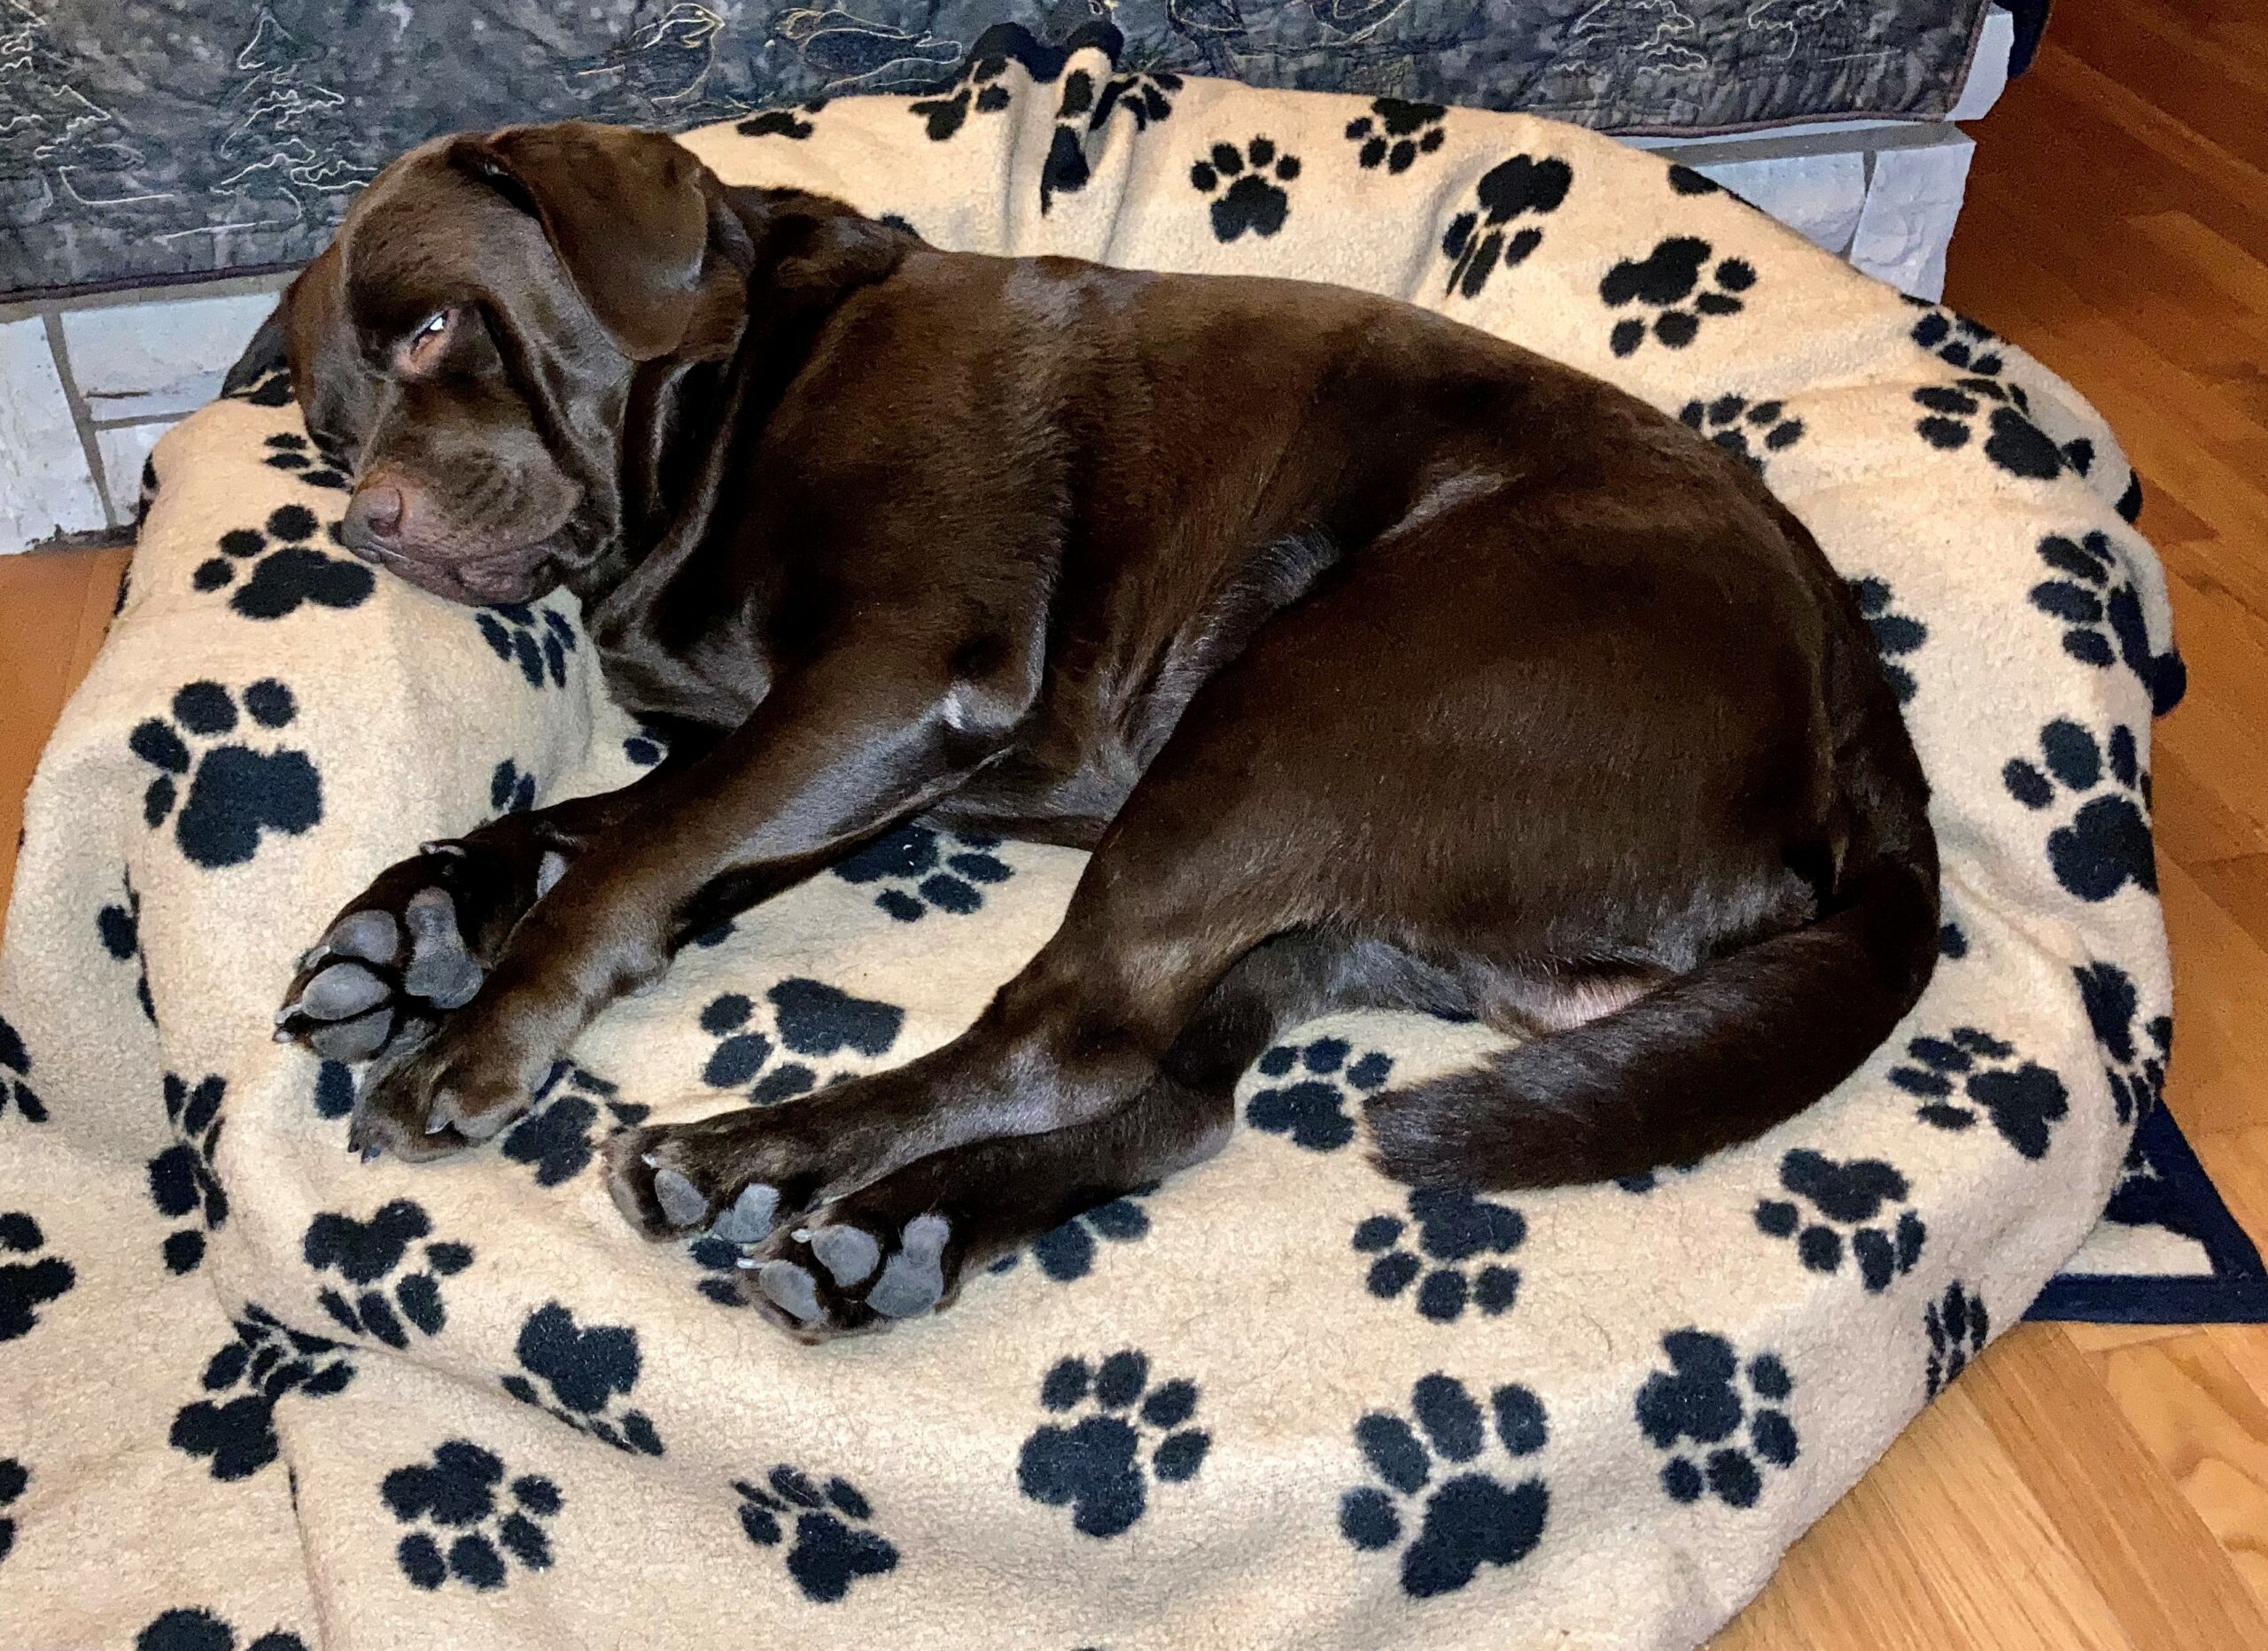 Chocolate lab, Bruno, sleeping on his dog bed.